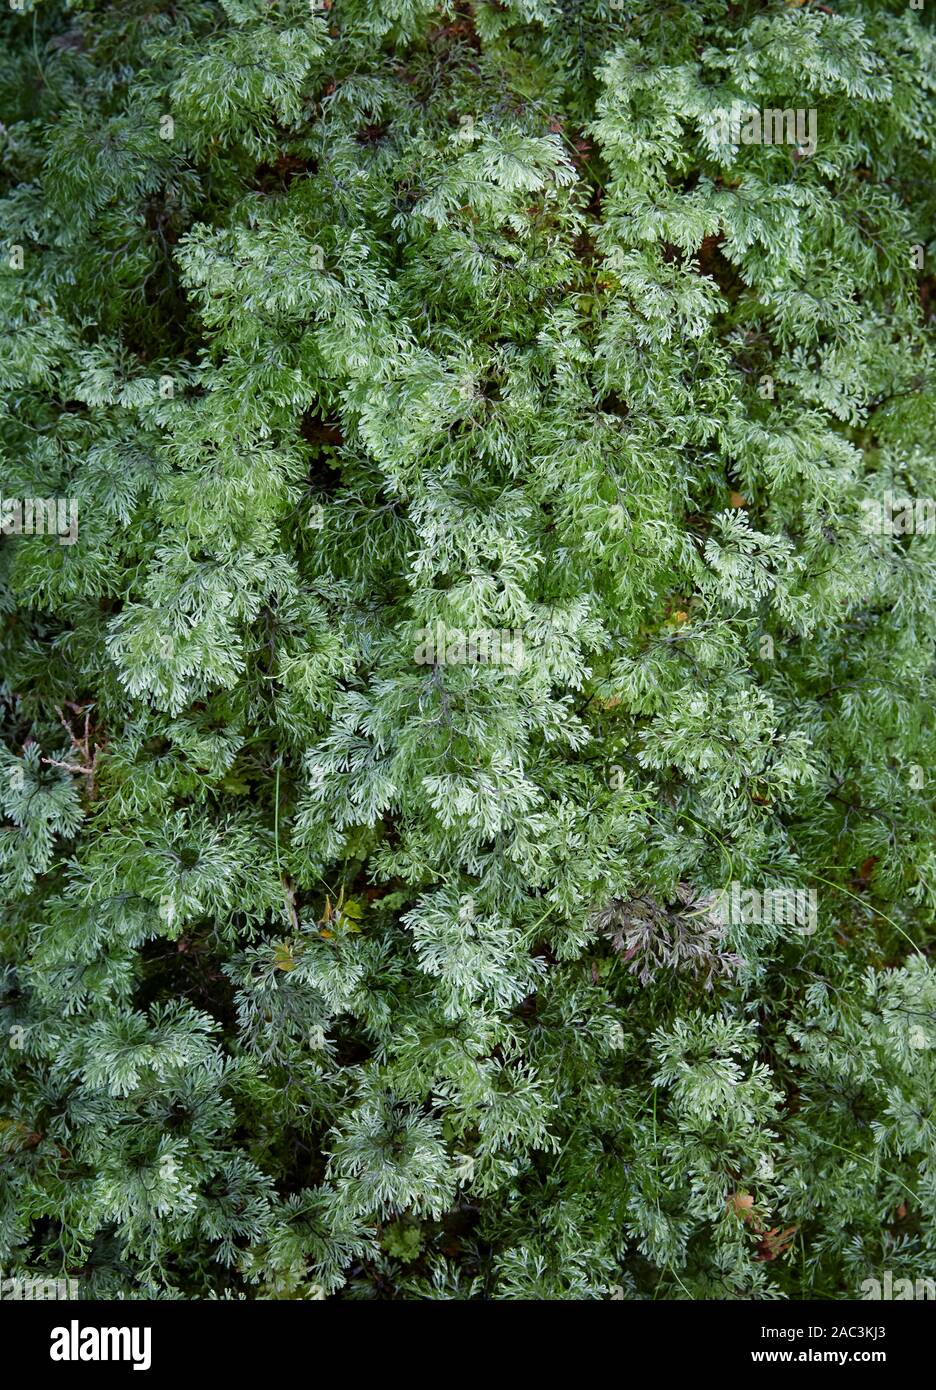 Lush growth of the epiphytic fern Hymenophyllum rerum growing on tree bark near Marian Lake in Fjordland New Zealand Stock Photo